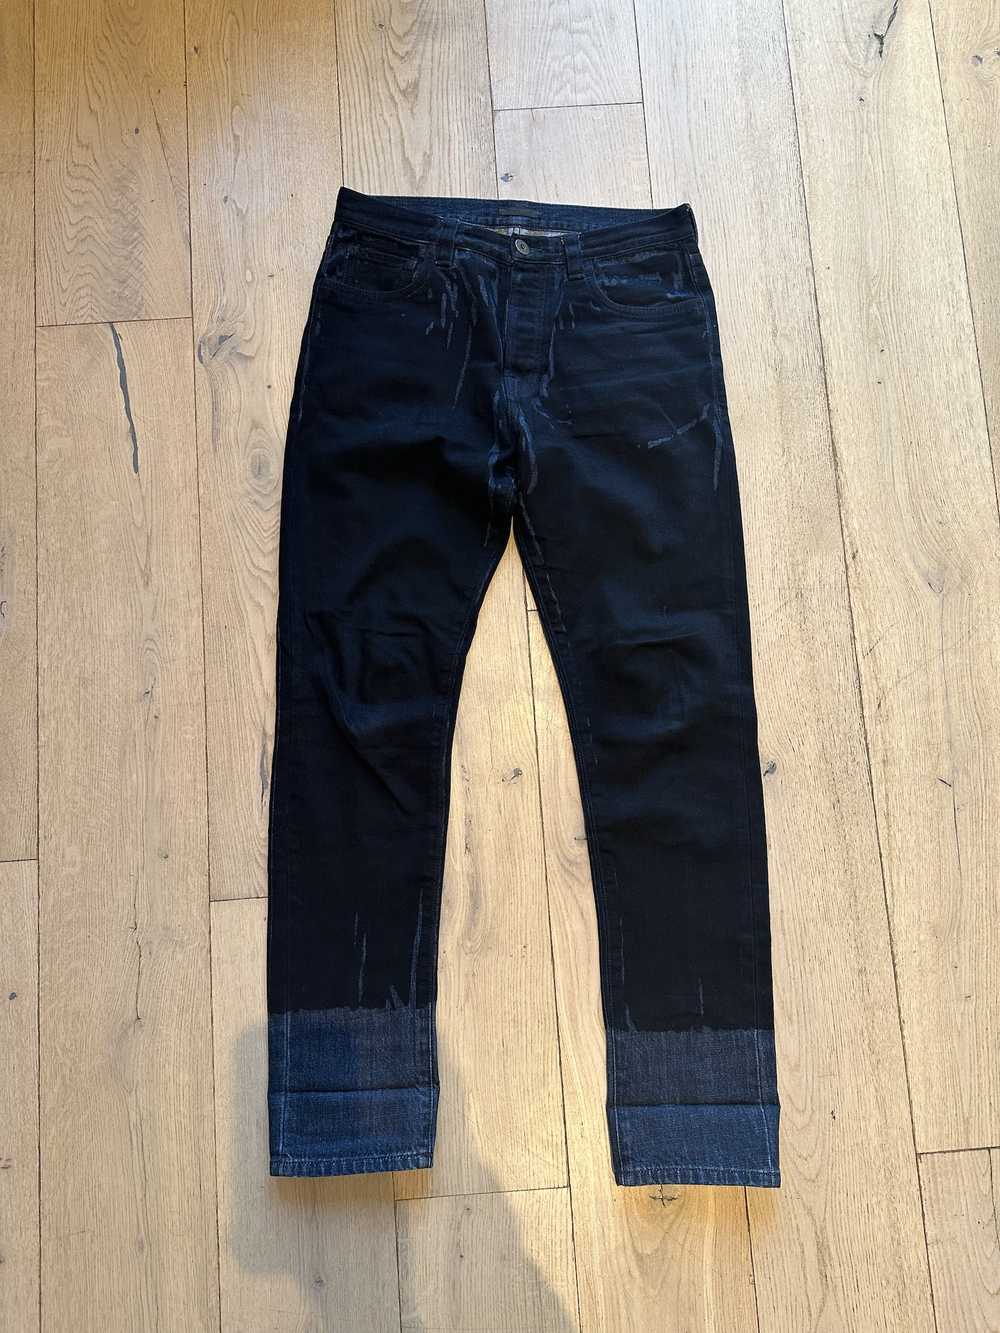 Prada Prada Over dyed slim fit jeans - image 3